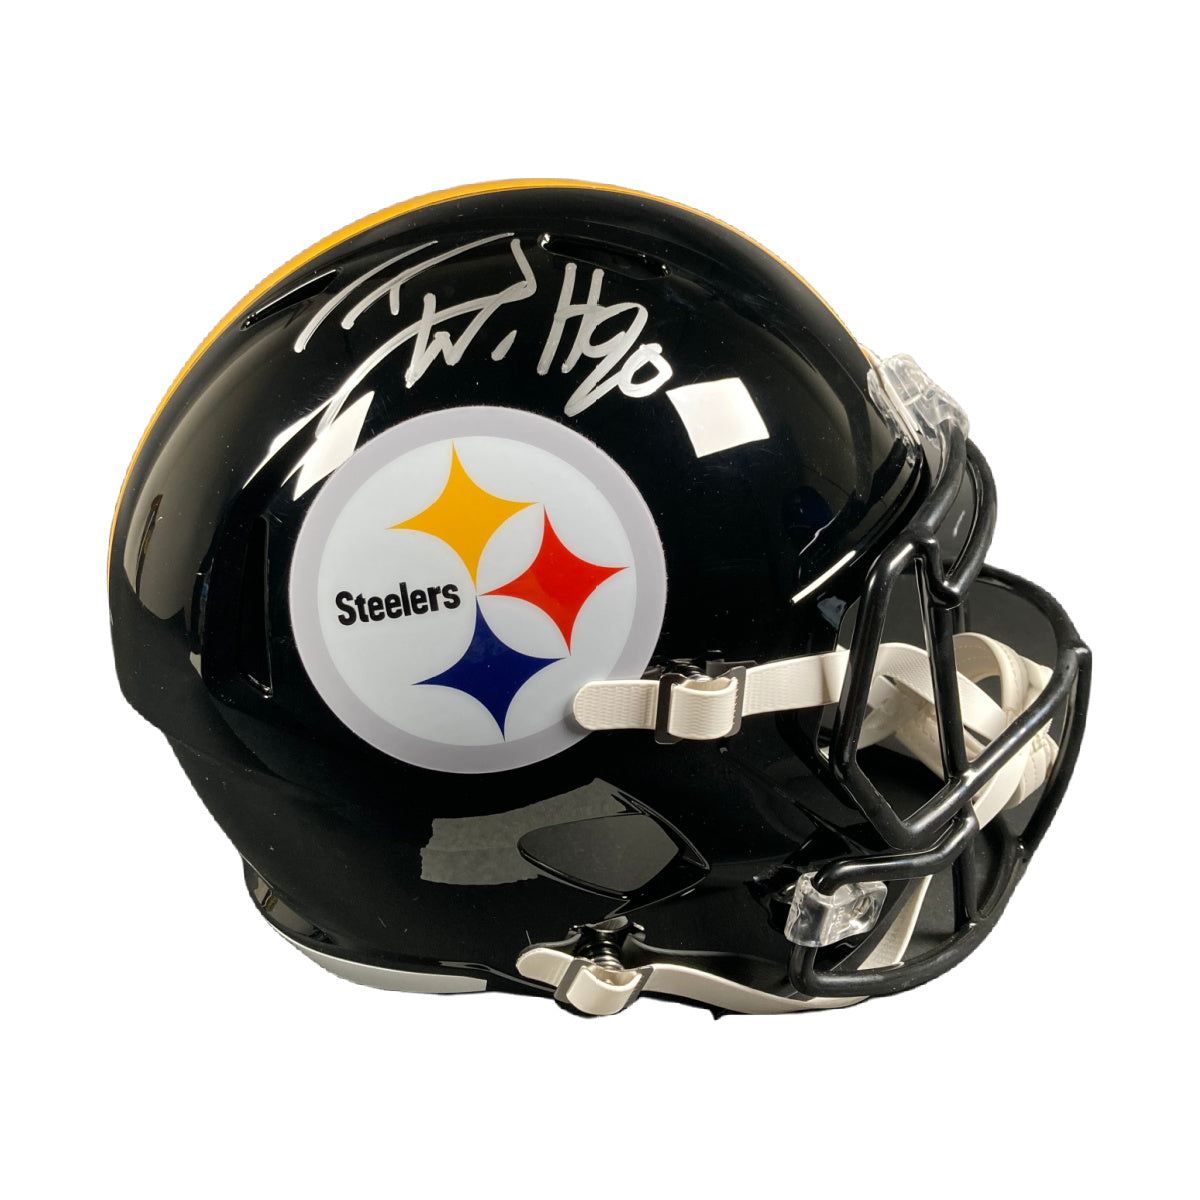 TJ Watt Signed FS Pittsburgh Steelers Helmet Autographed BAS COA